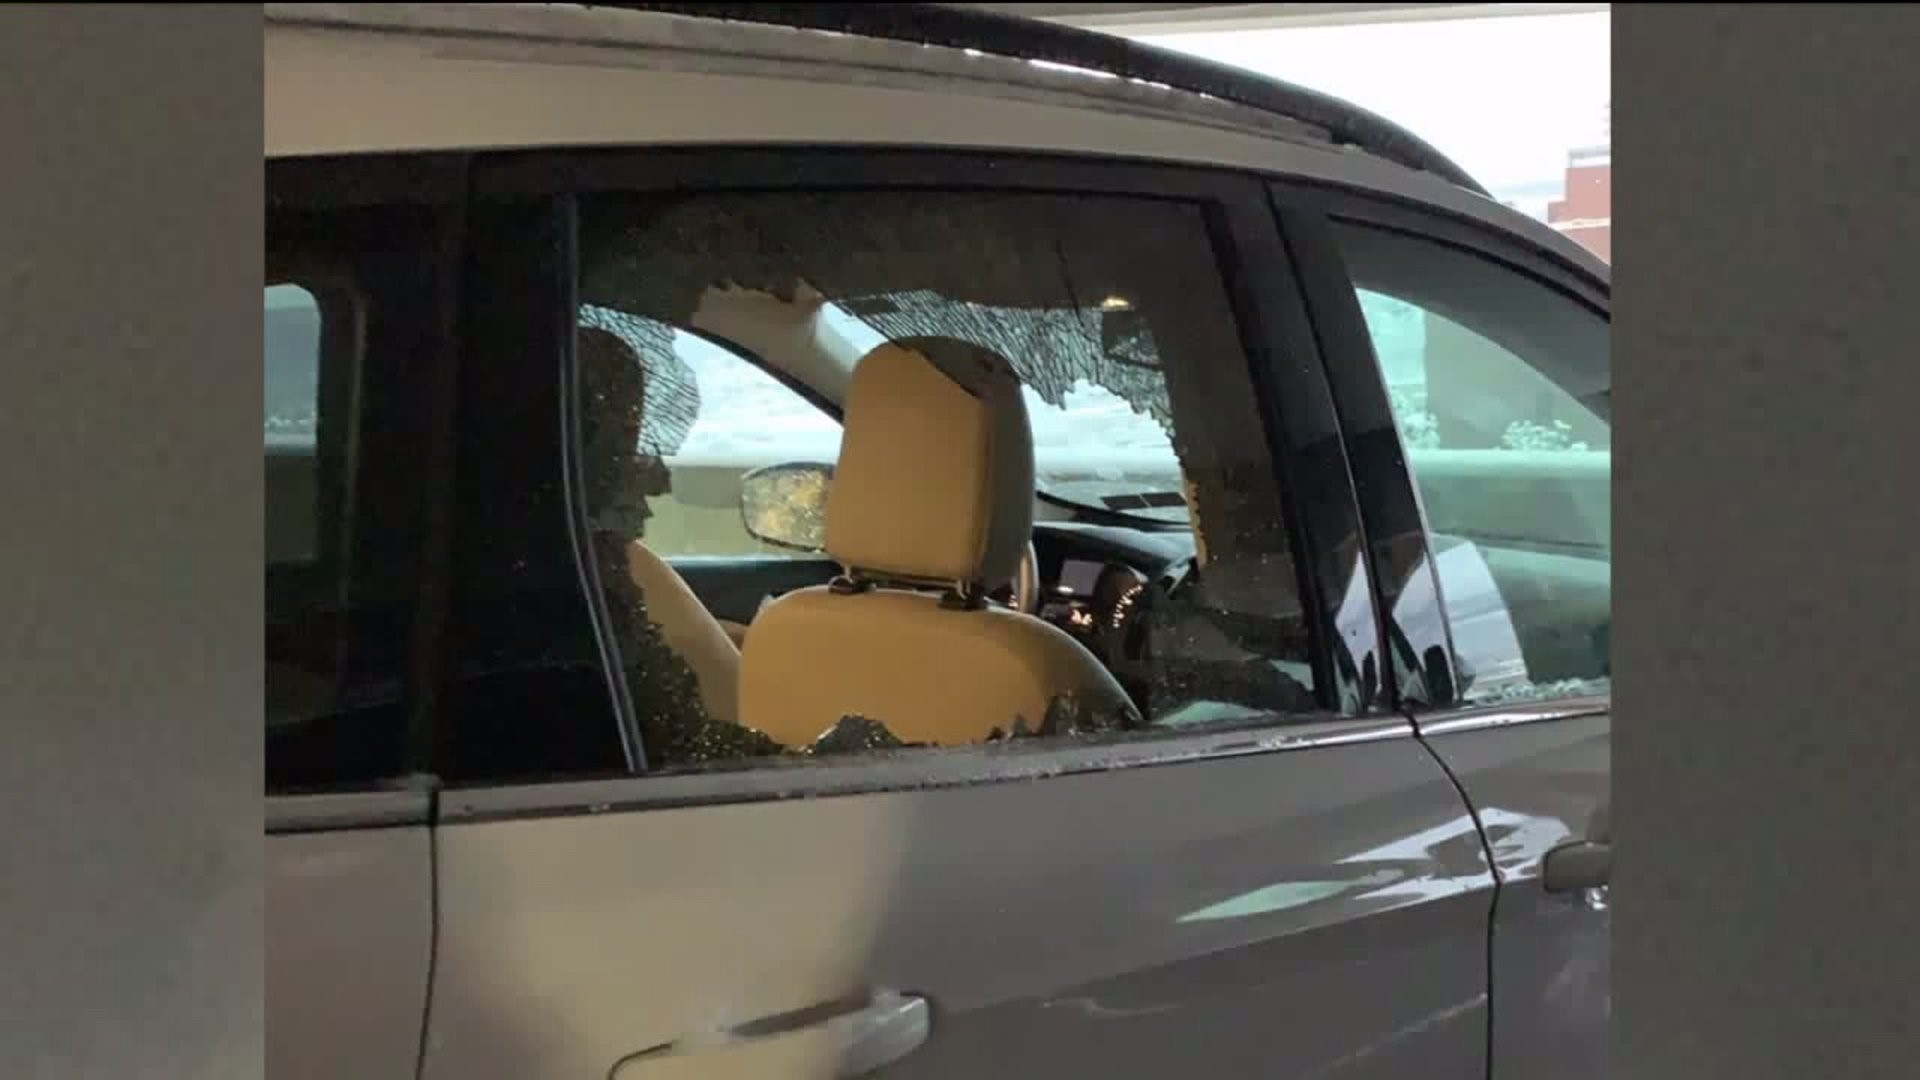 Vehicle Vandals Targeting Hospital Parking Garage